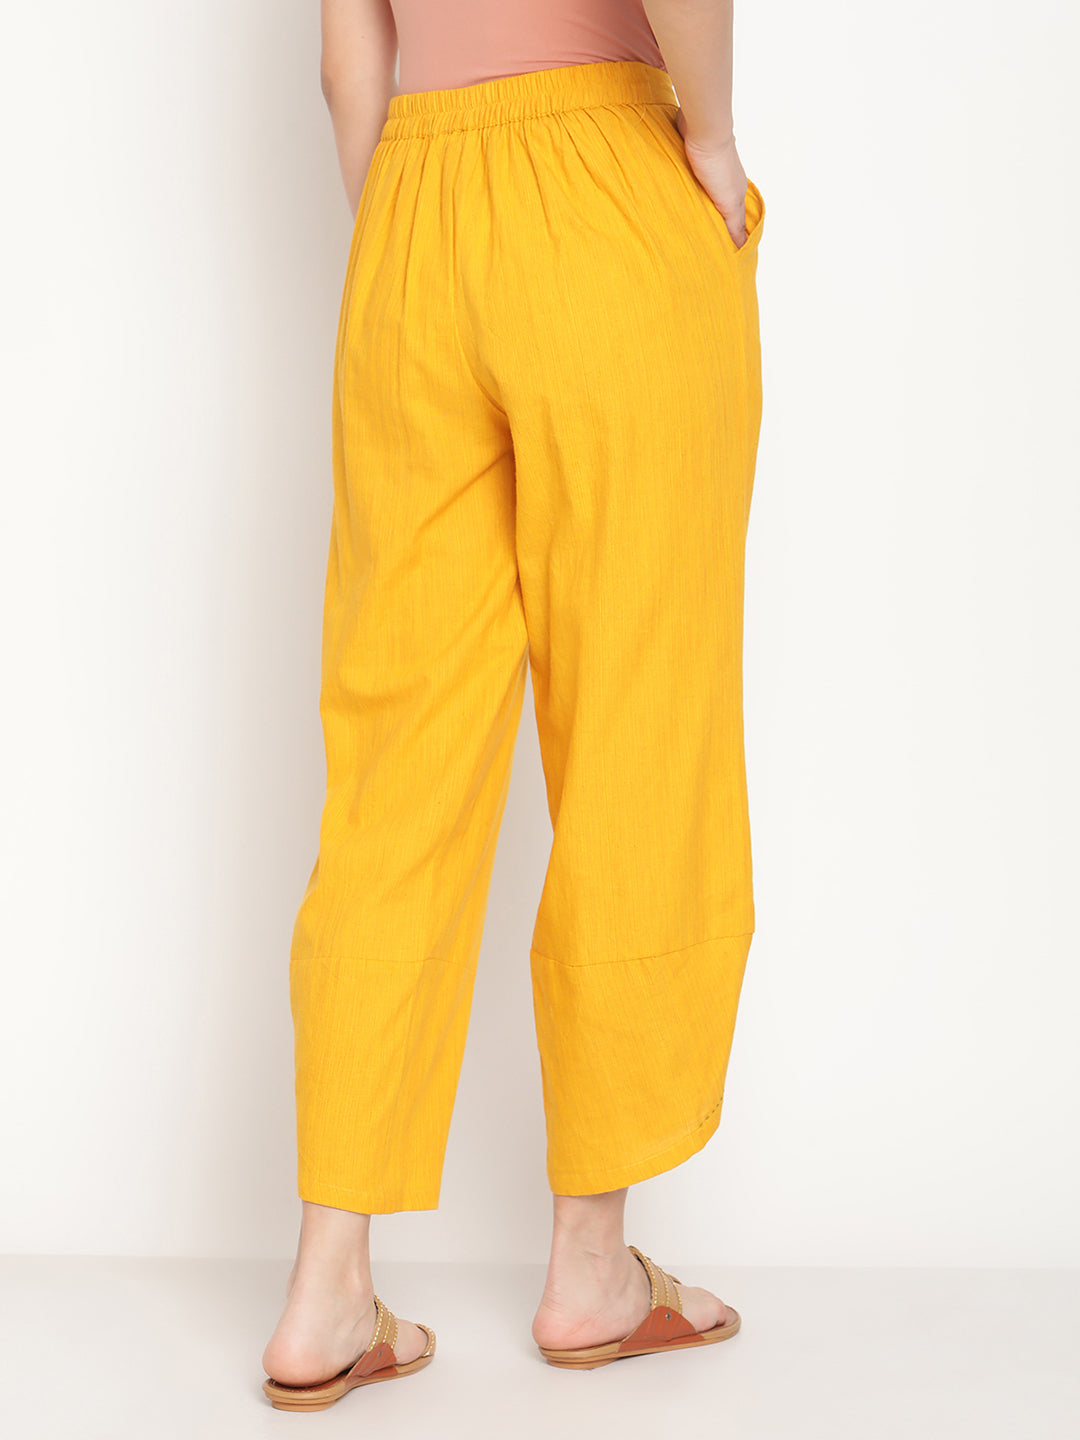 Cotton Flex Ochre Yellow Overlapped Hem Pants